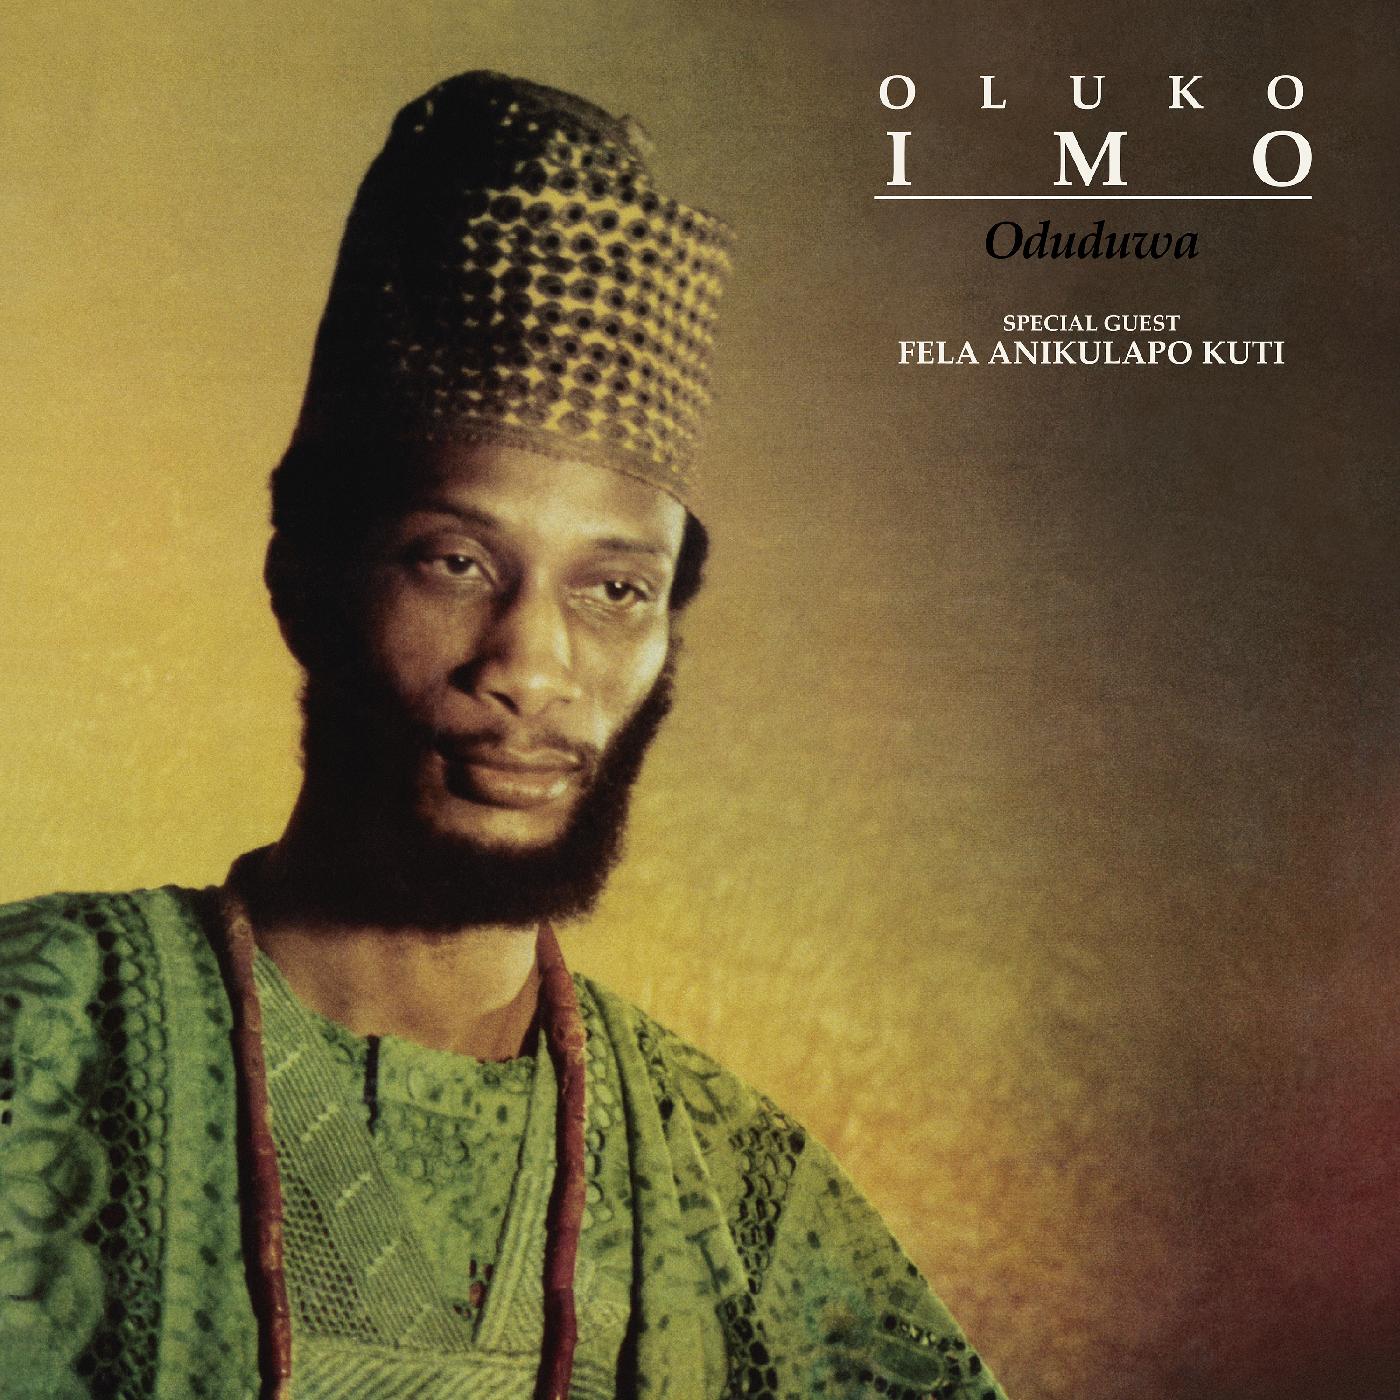 Oluko Imo - Oduduwa / Were Oju Le (The Eyes Are Getting Red) (Vinyl)